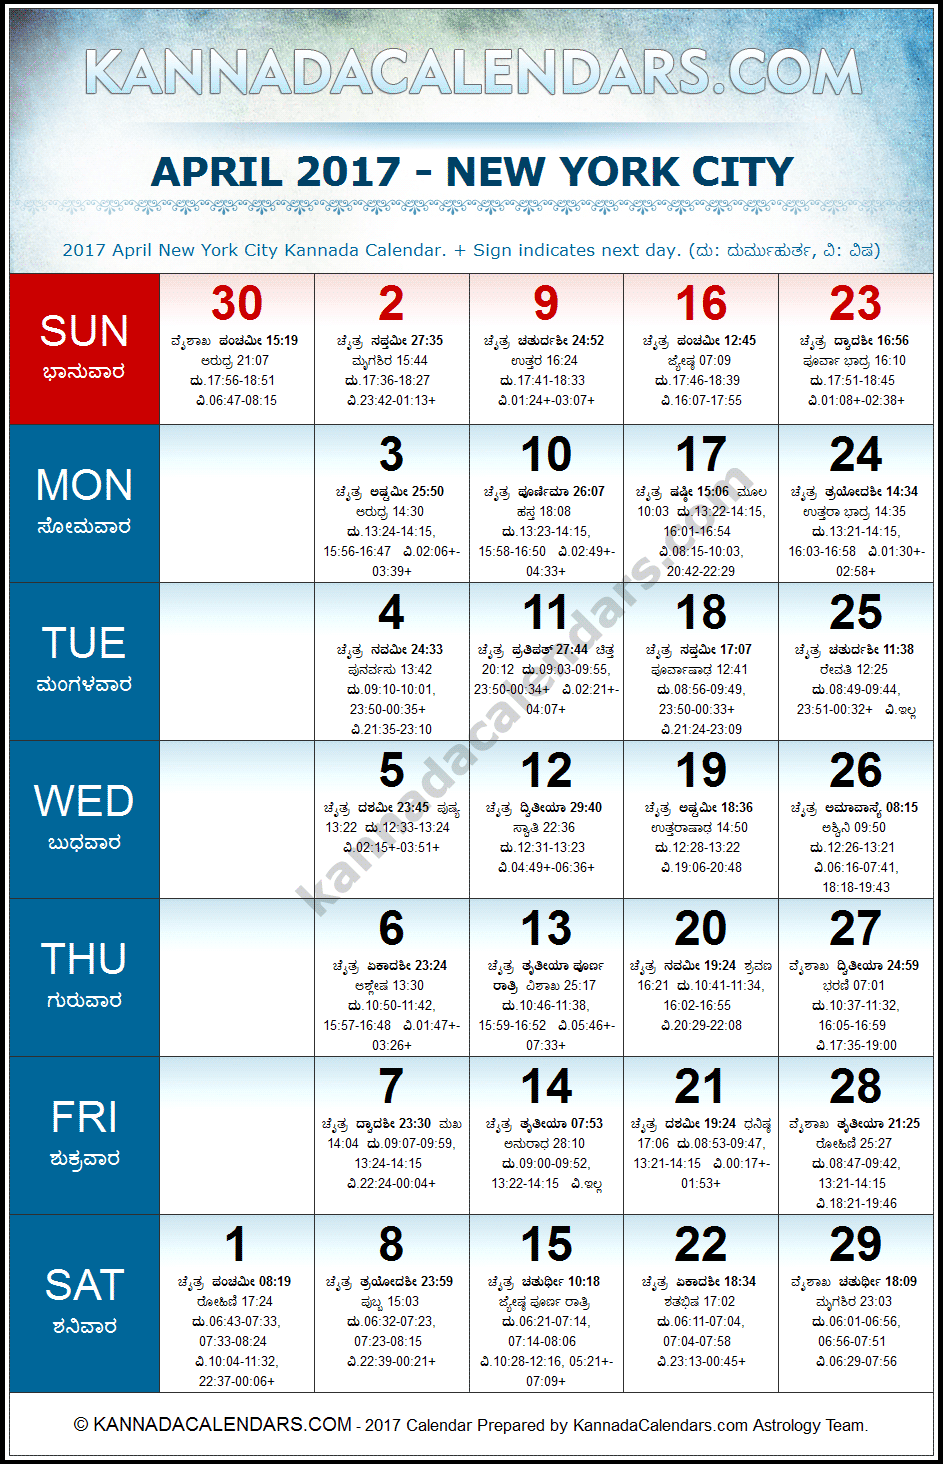 April 2017 Kannada Calendar for New York, USA